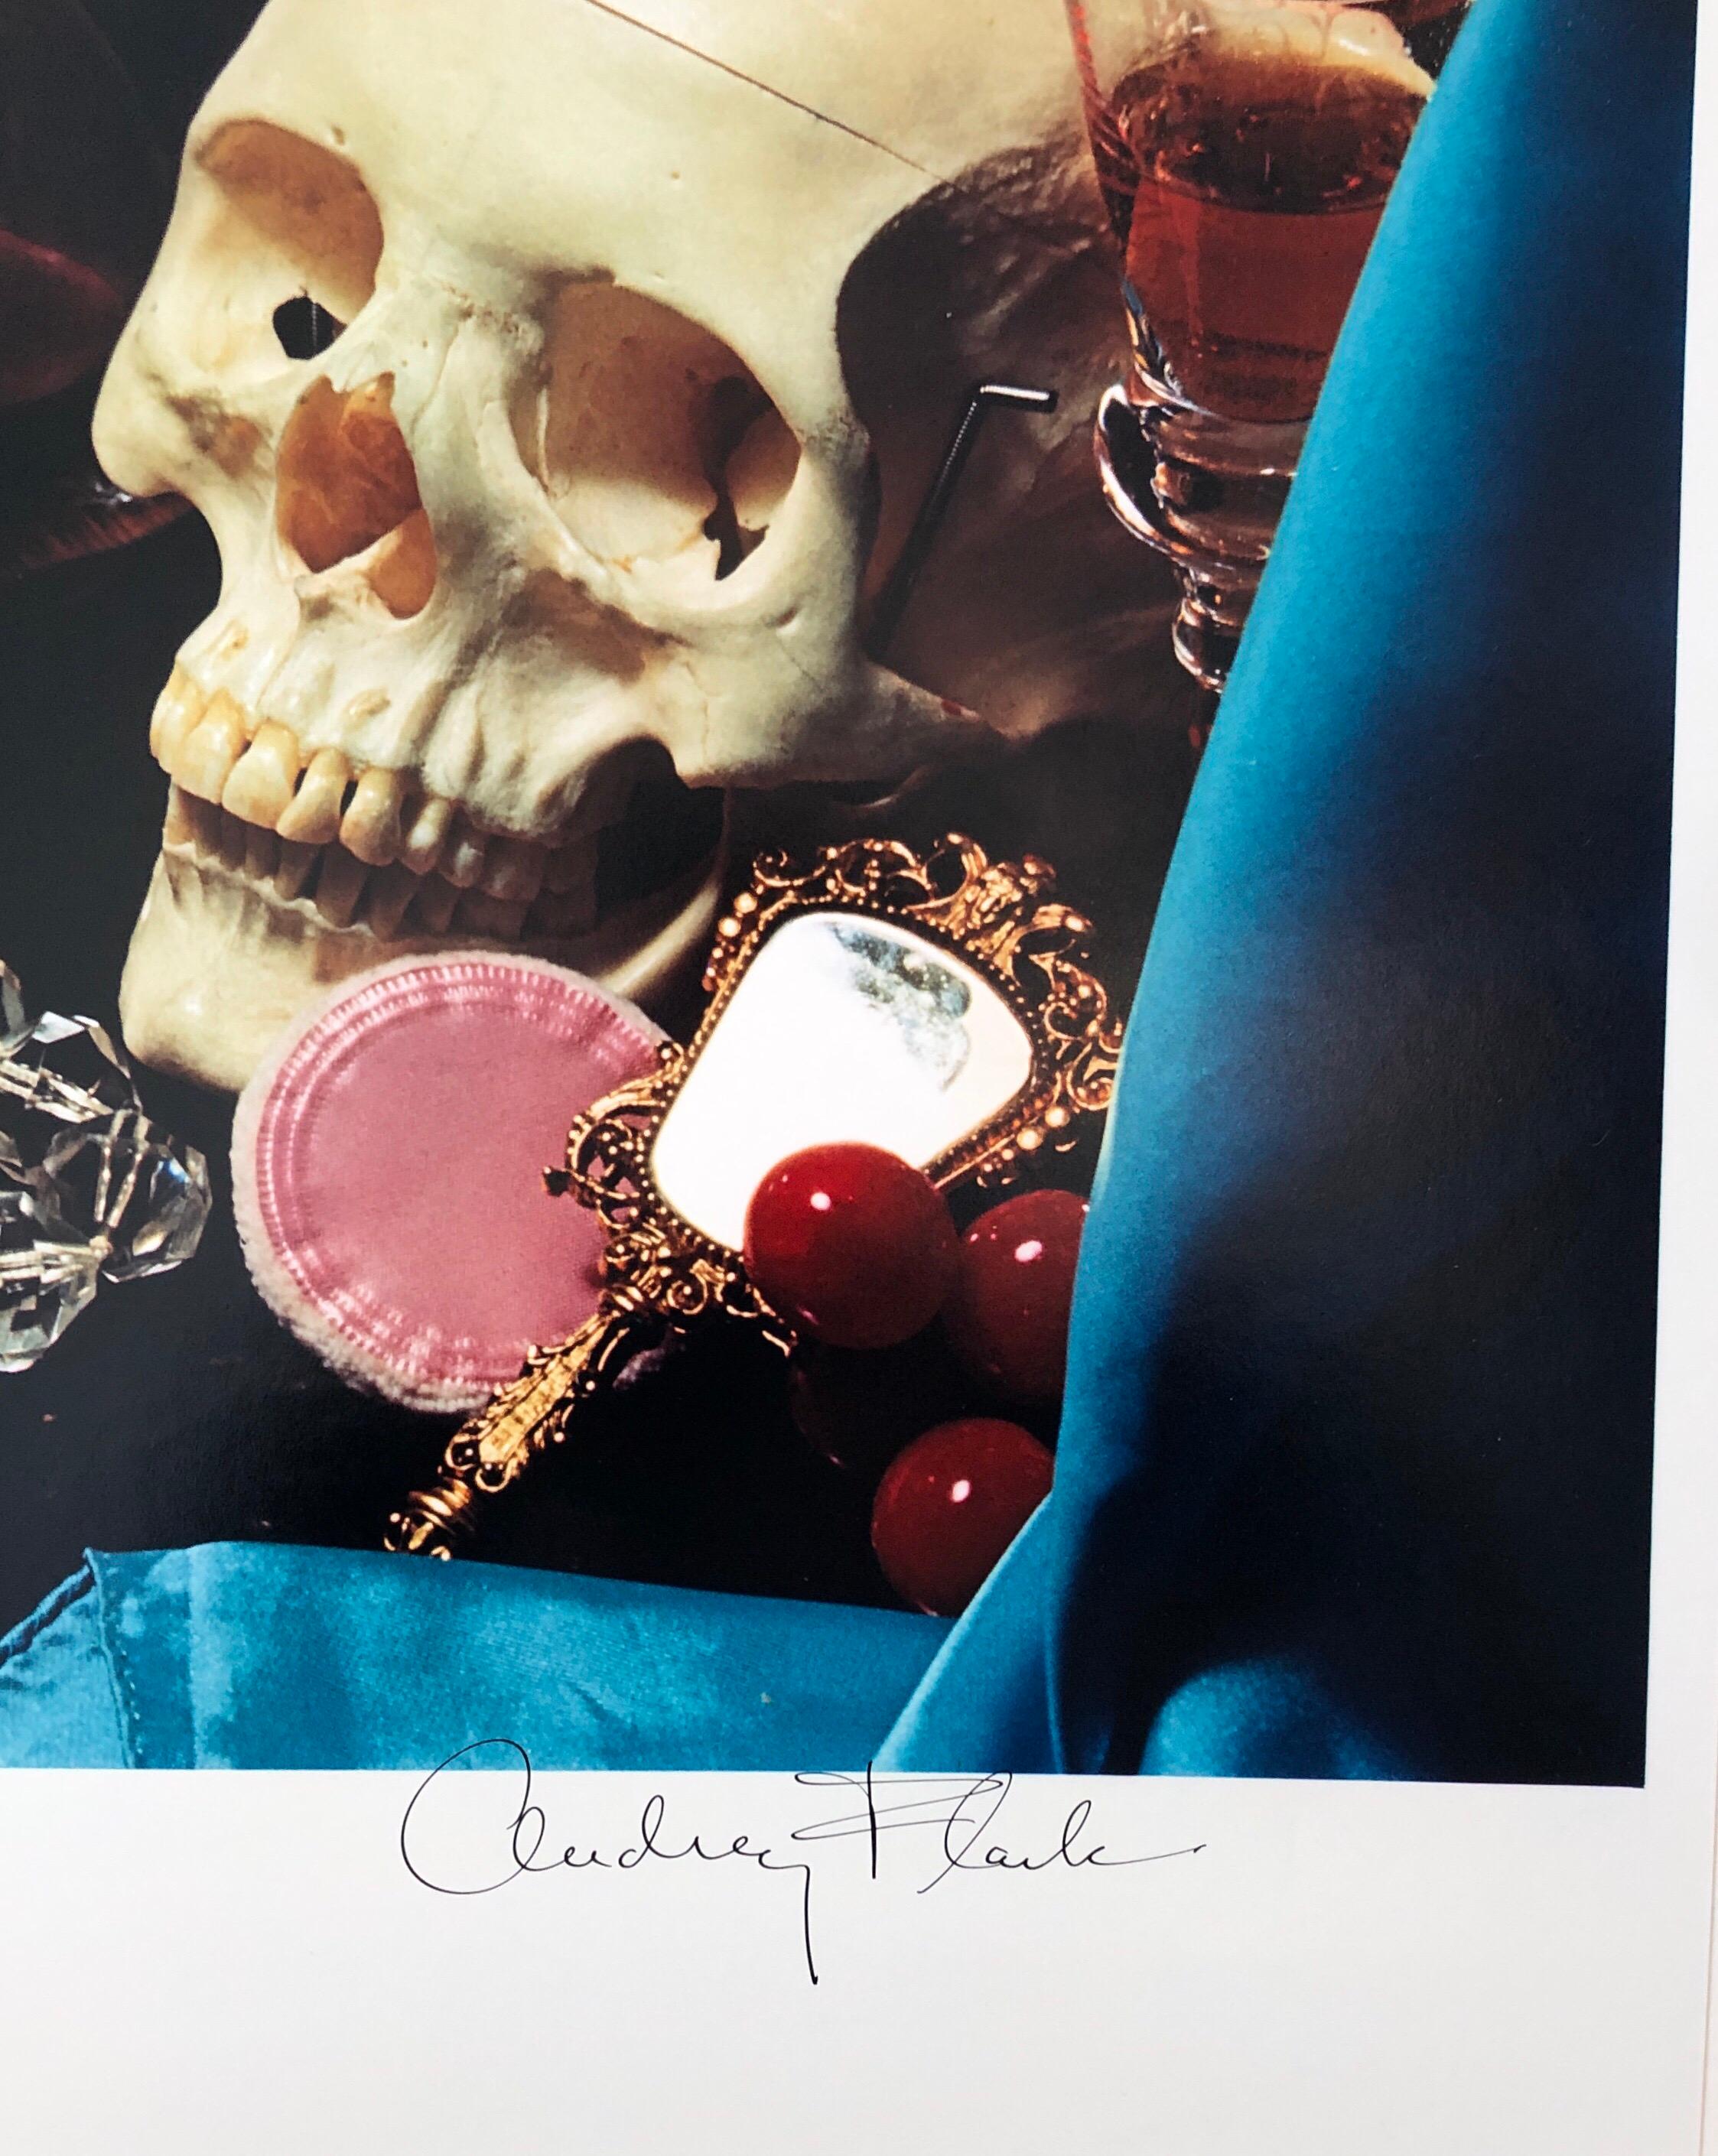 Pop Art Color Photograph Dye Transfer Print Audrey Flack Tarot Card, Skull Photo 2